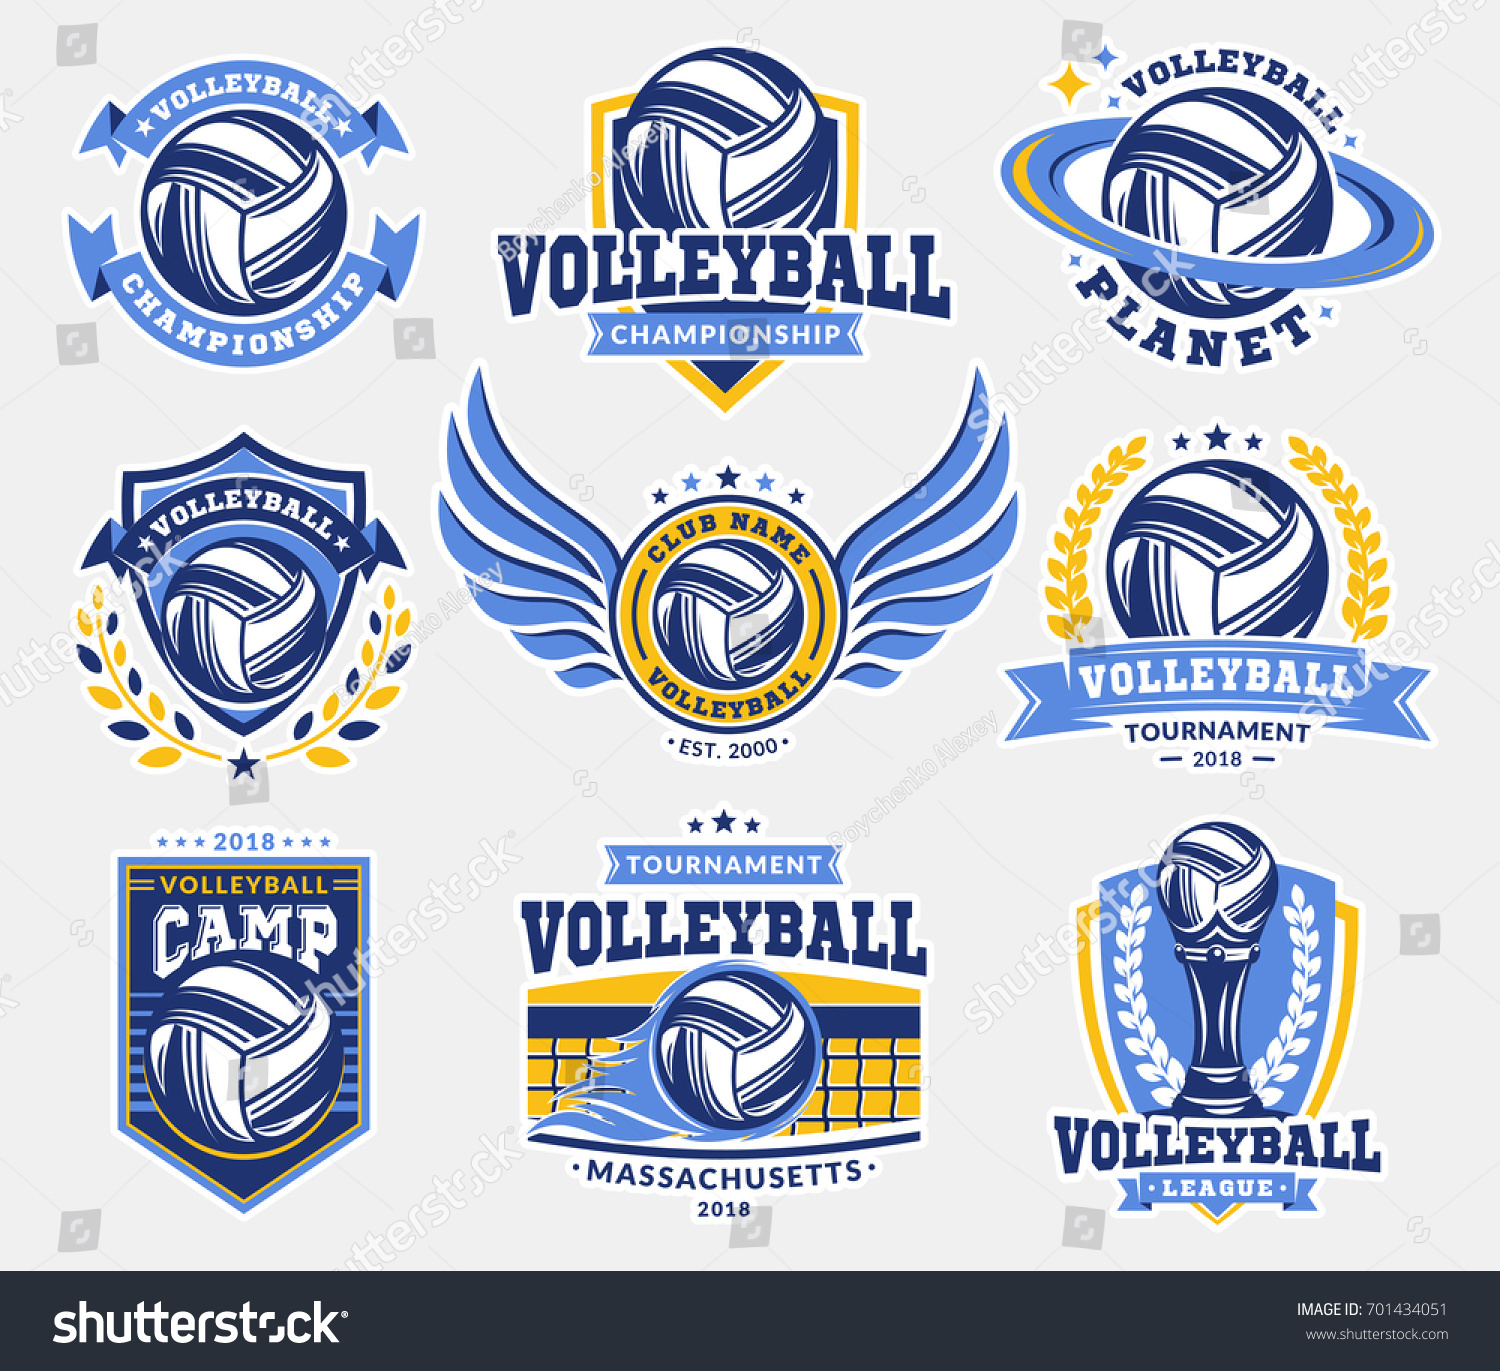 4,956 Volleyball championship logo Stock Vectors, Images & Vector Art ...